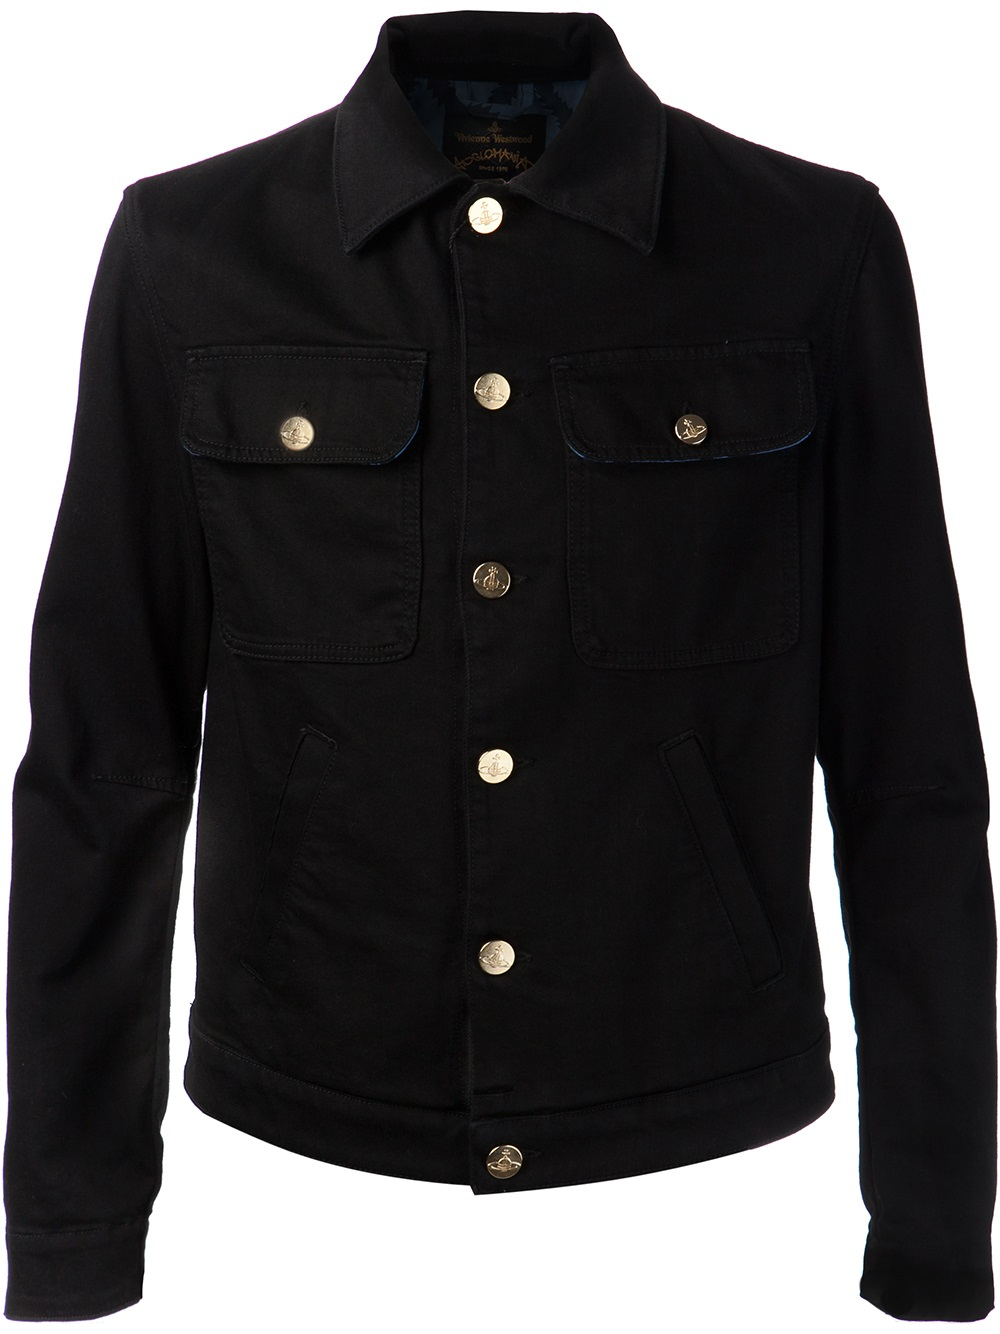 Vivienne Westwood Denim Jacket in Black for Men - Lyst